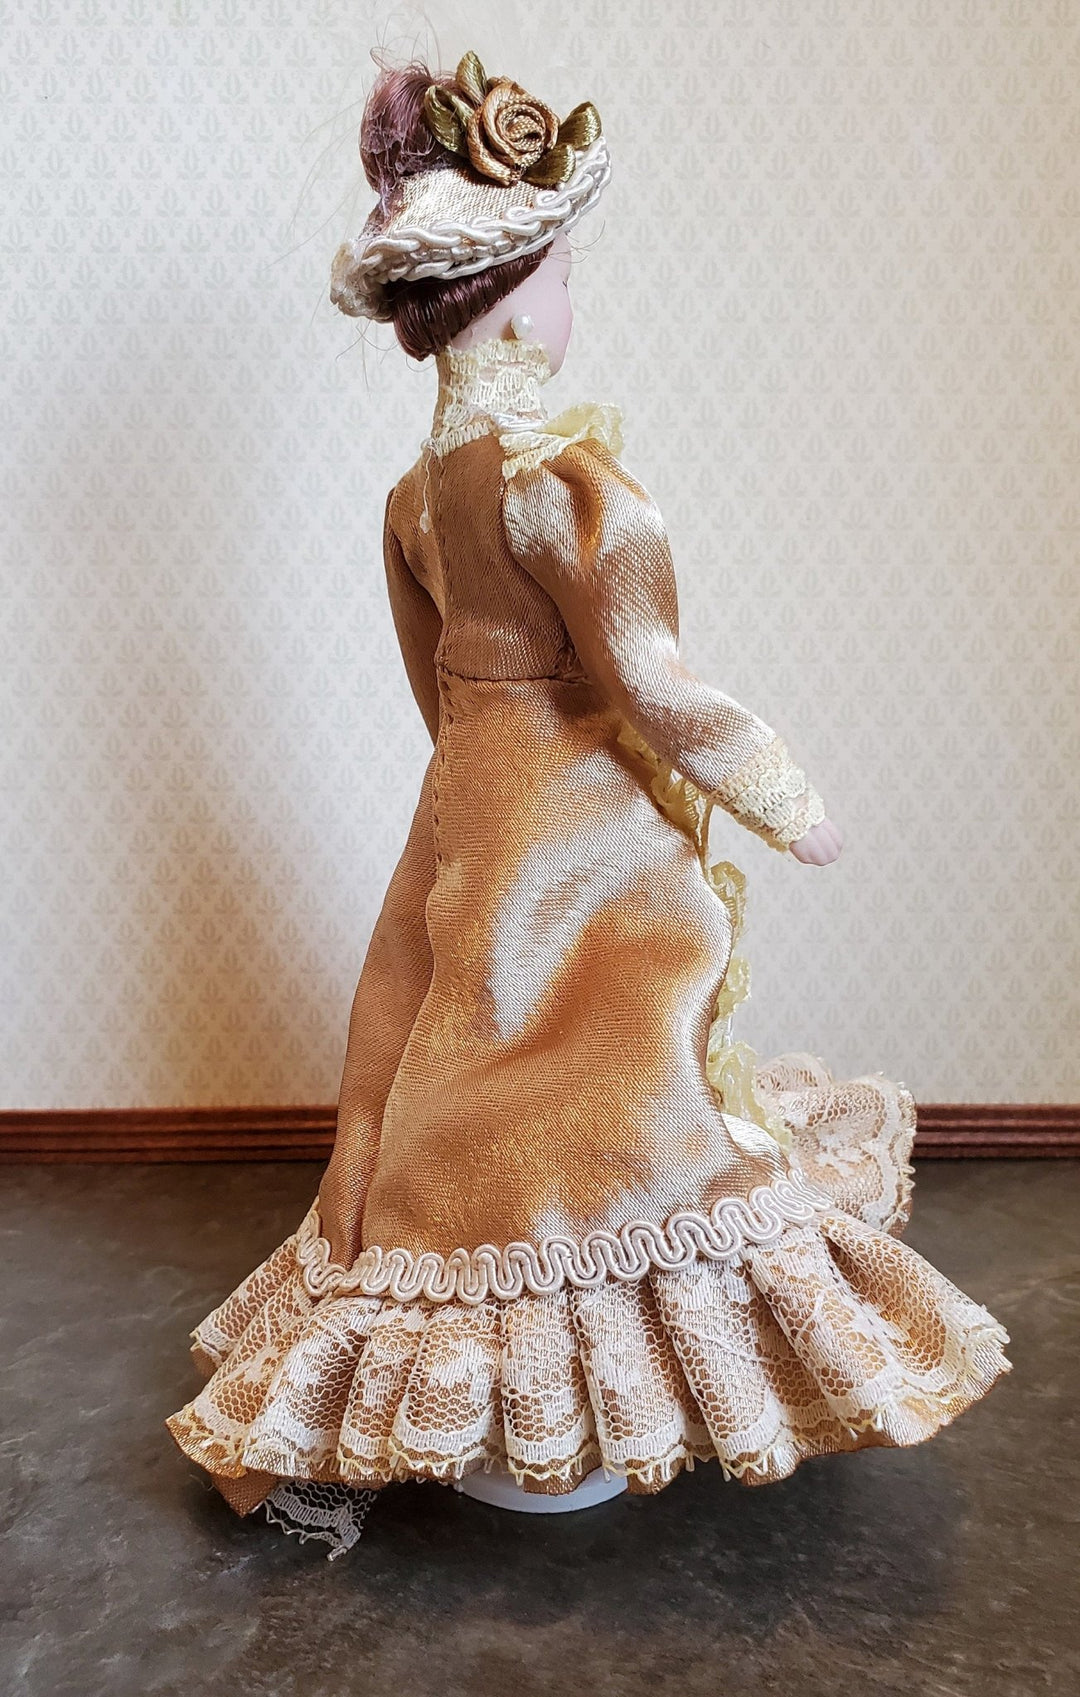 Dollhouse Miniature Victorian Doll Porcelain Fancy Lace Dress and Hat 1:12 Scale - Miniature Crush